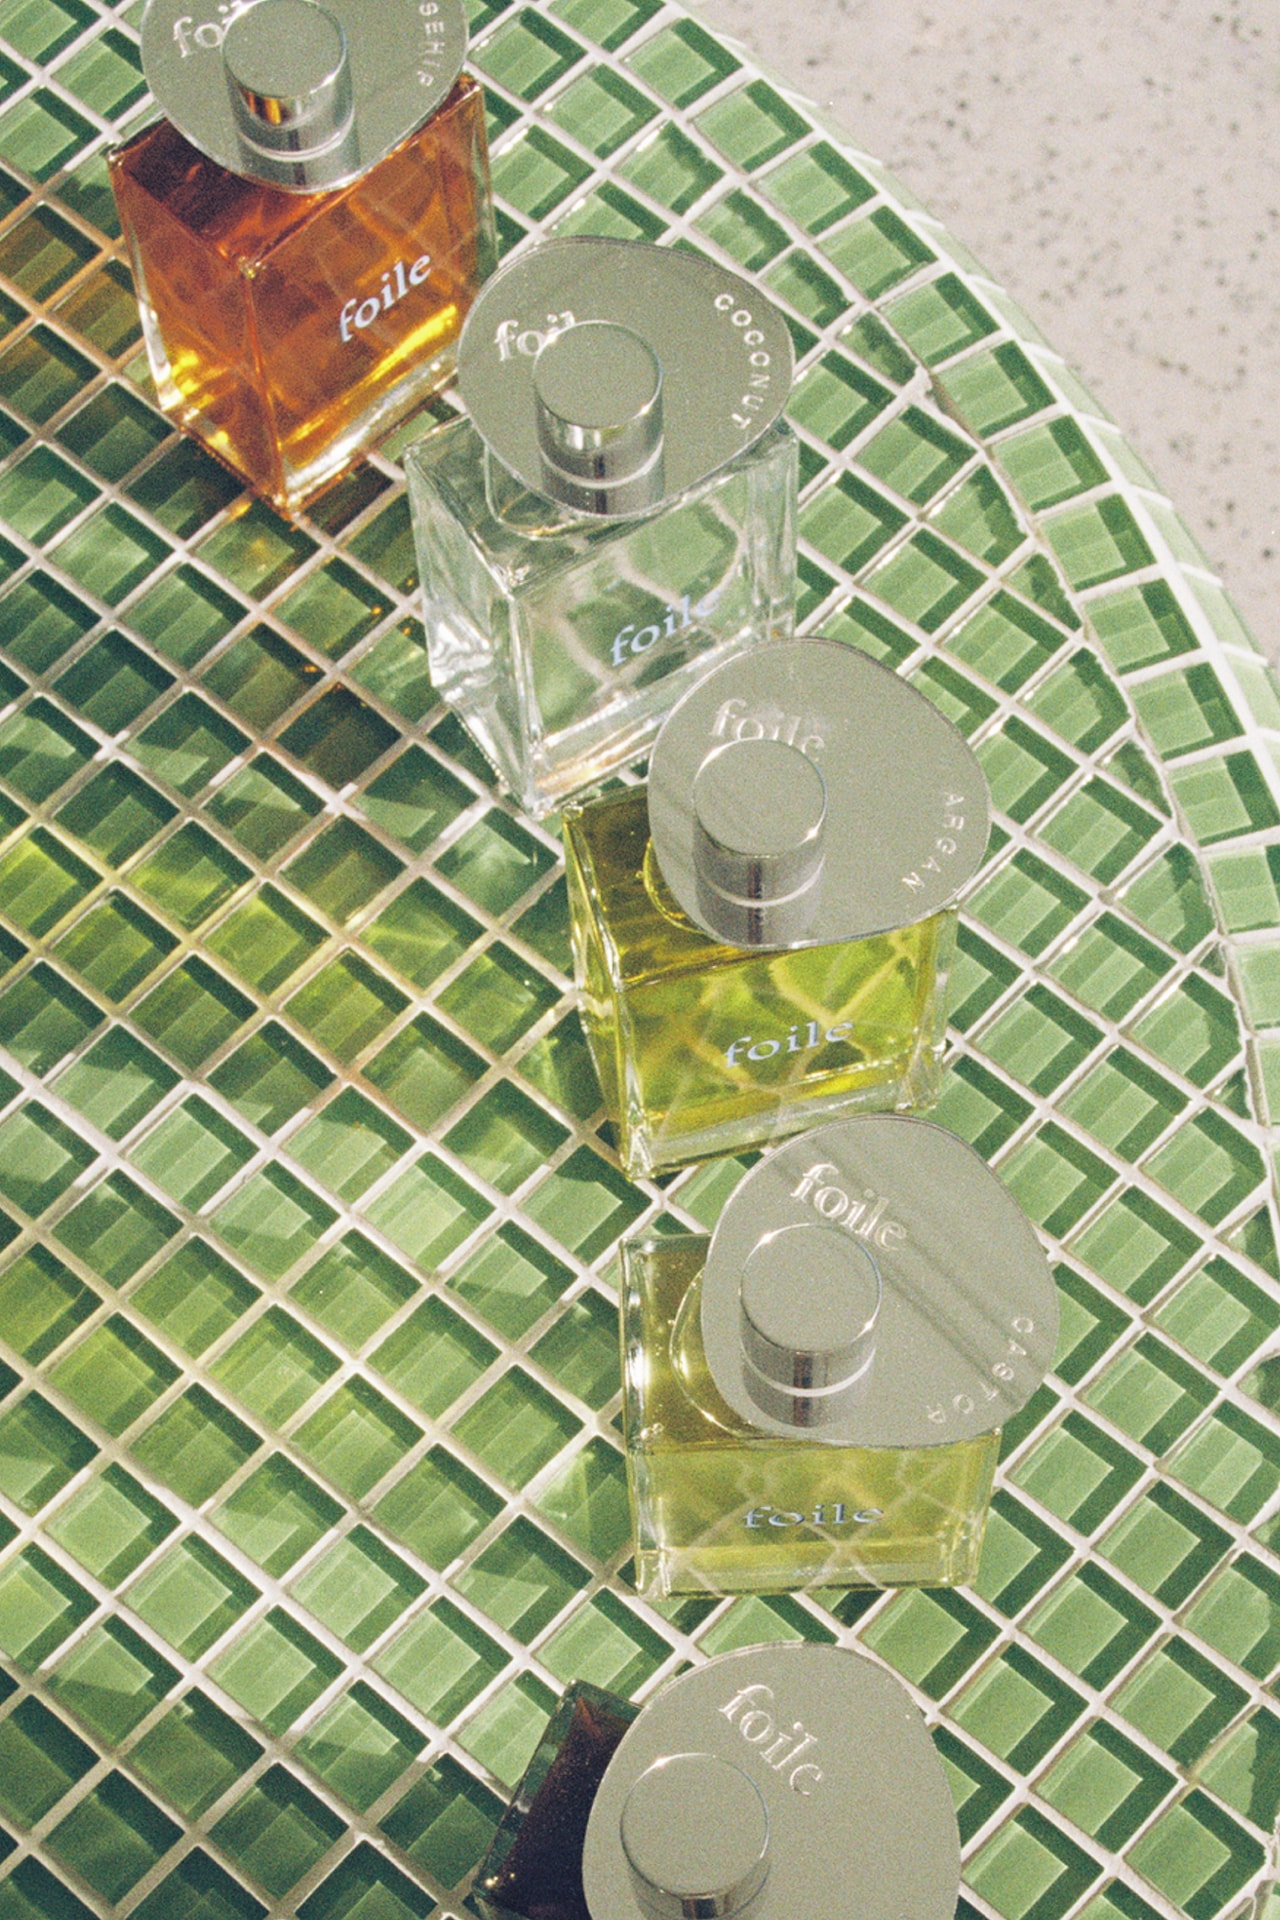 foile classics oils refillable skincare australia australian beauty brand concept store bondi sydney